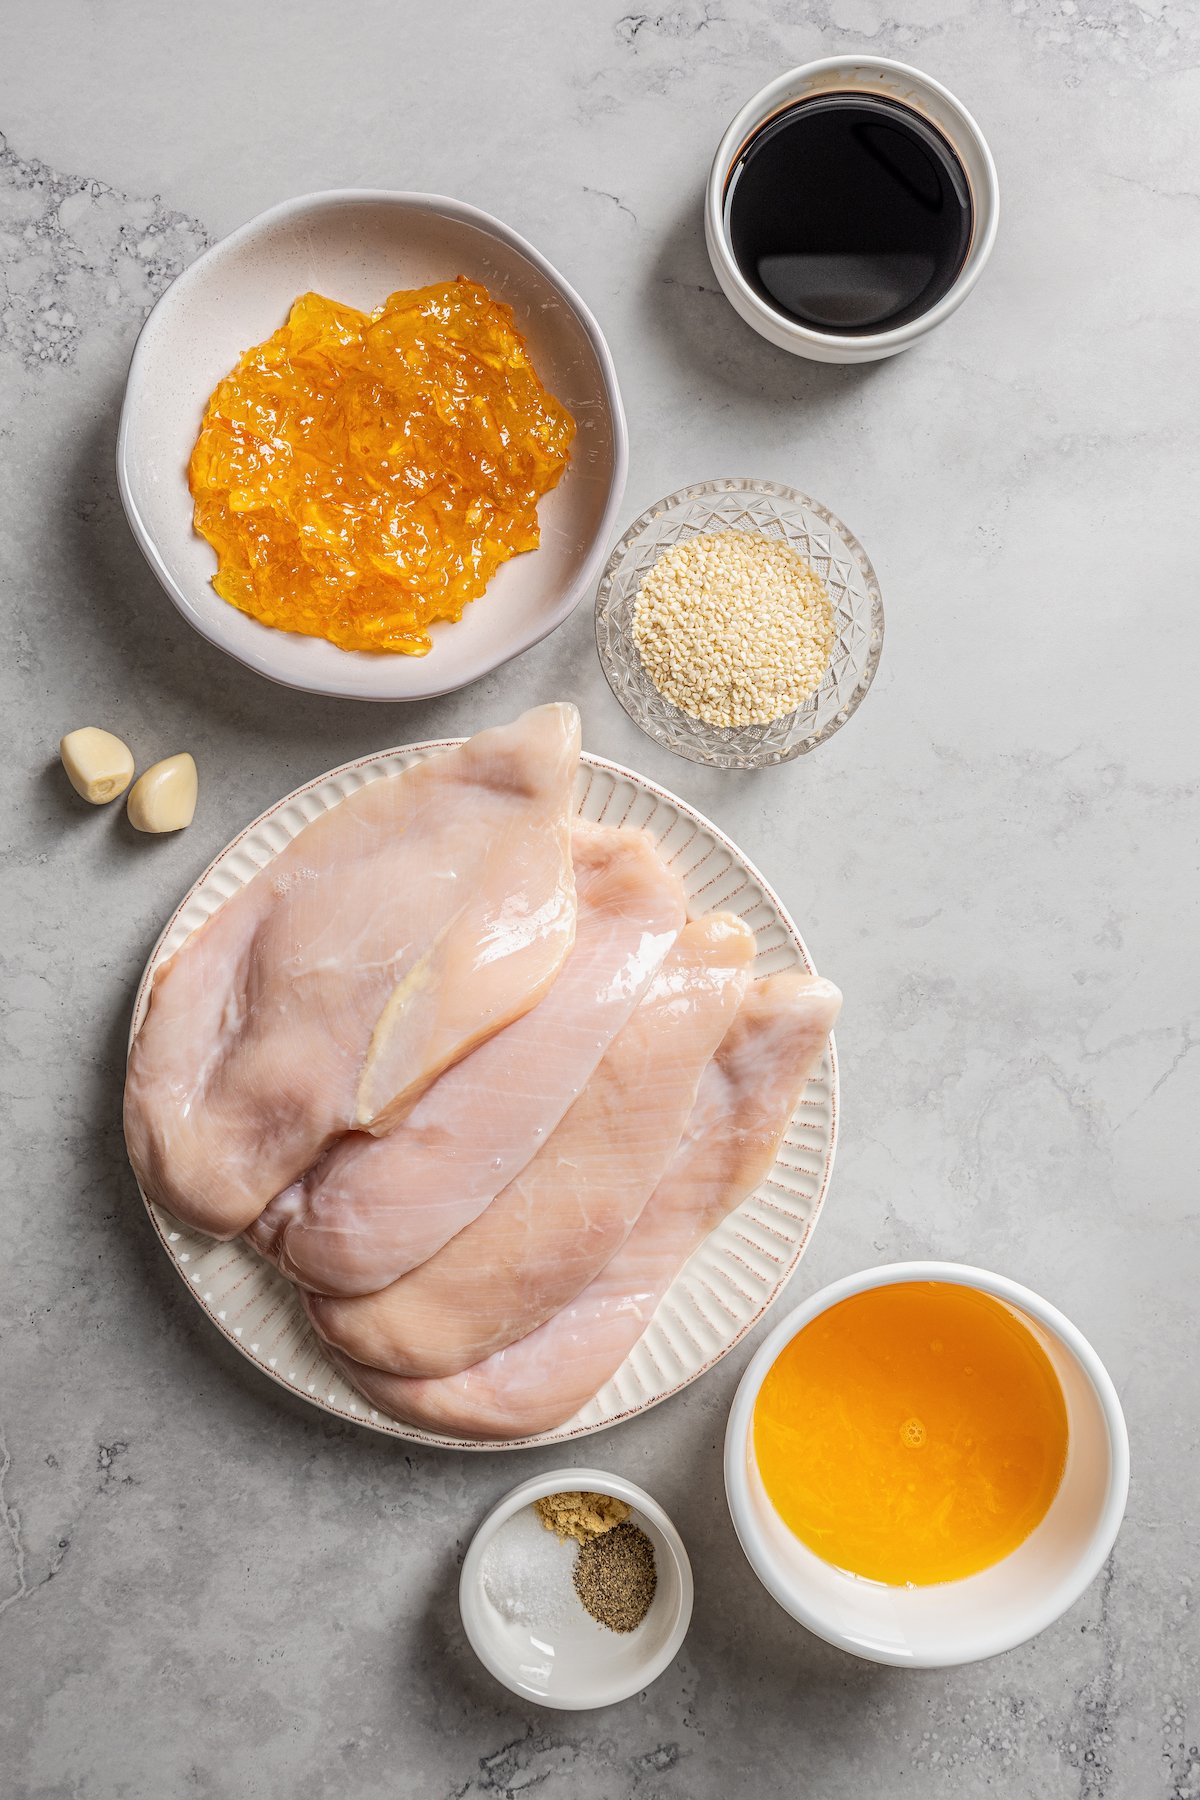 Ingredients for crockpot orange chicken separated into bowls.